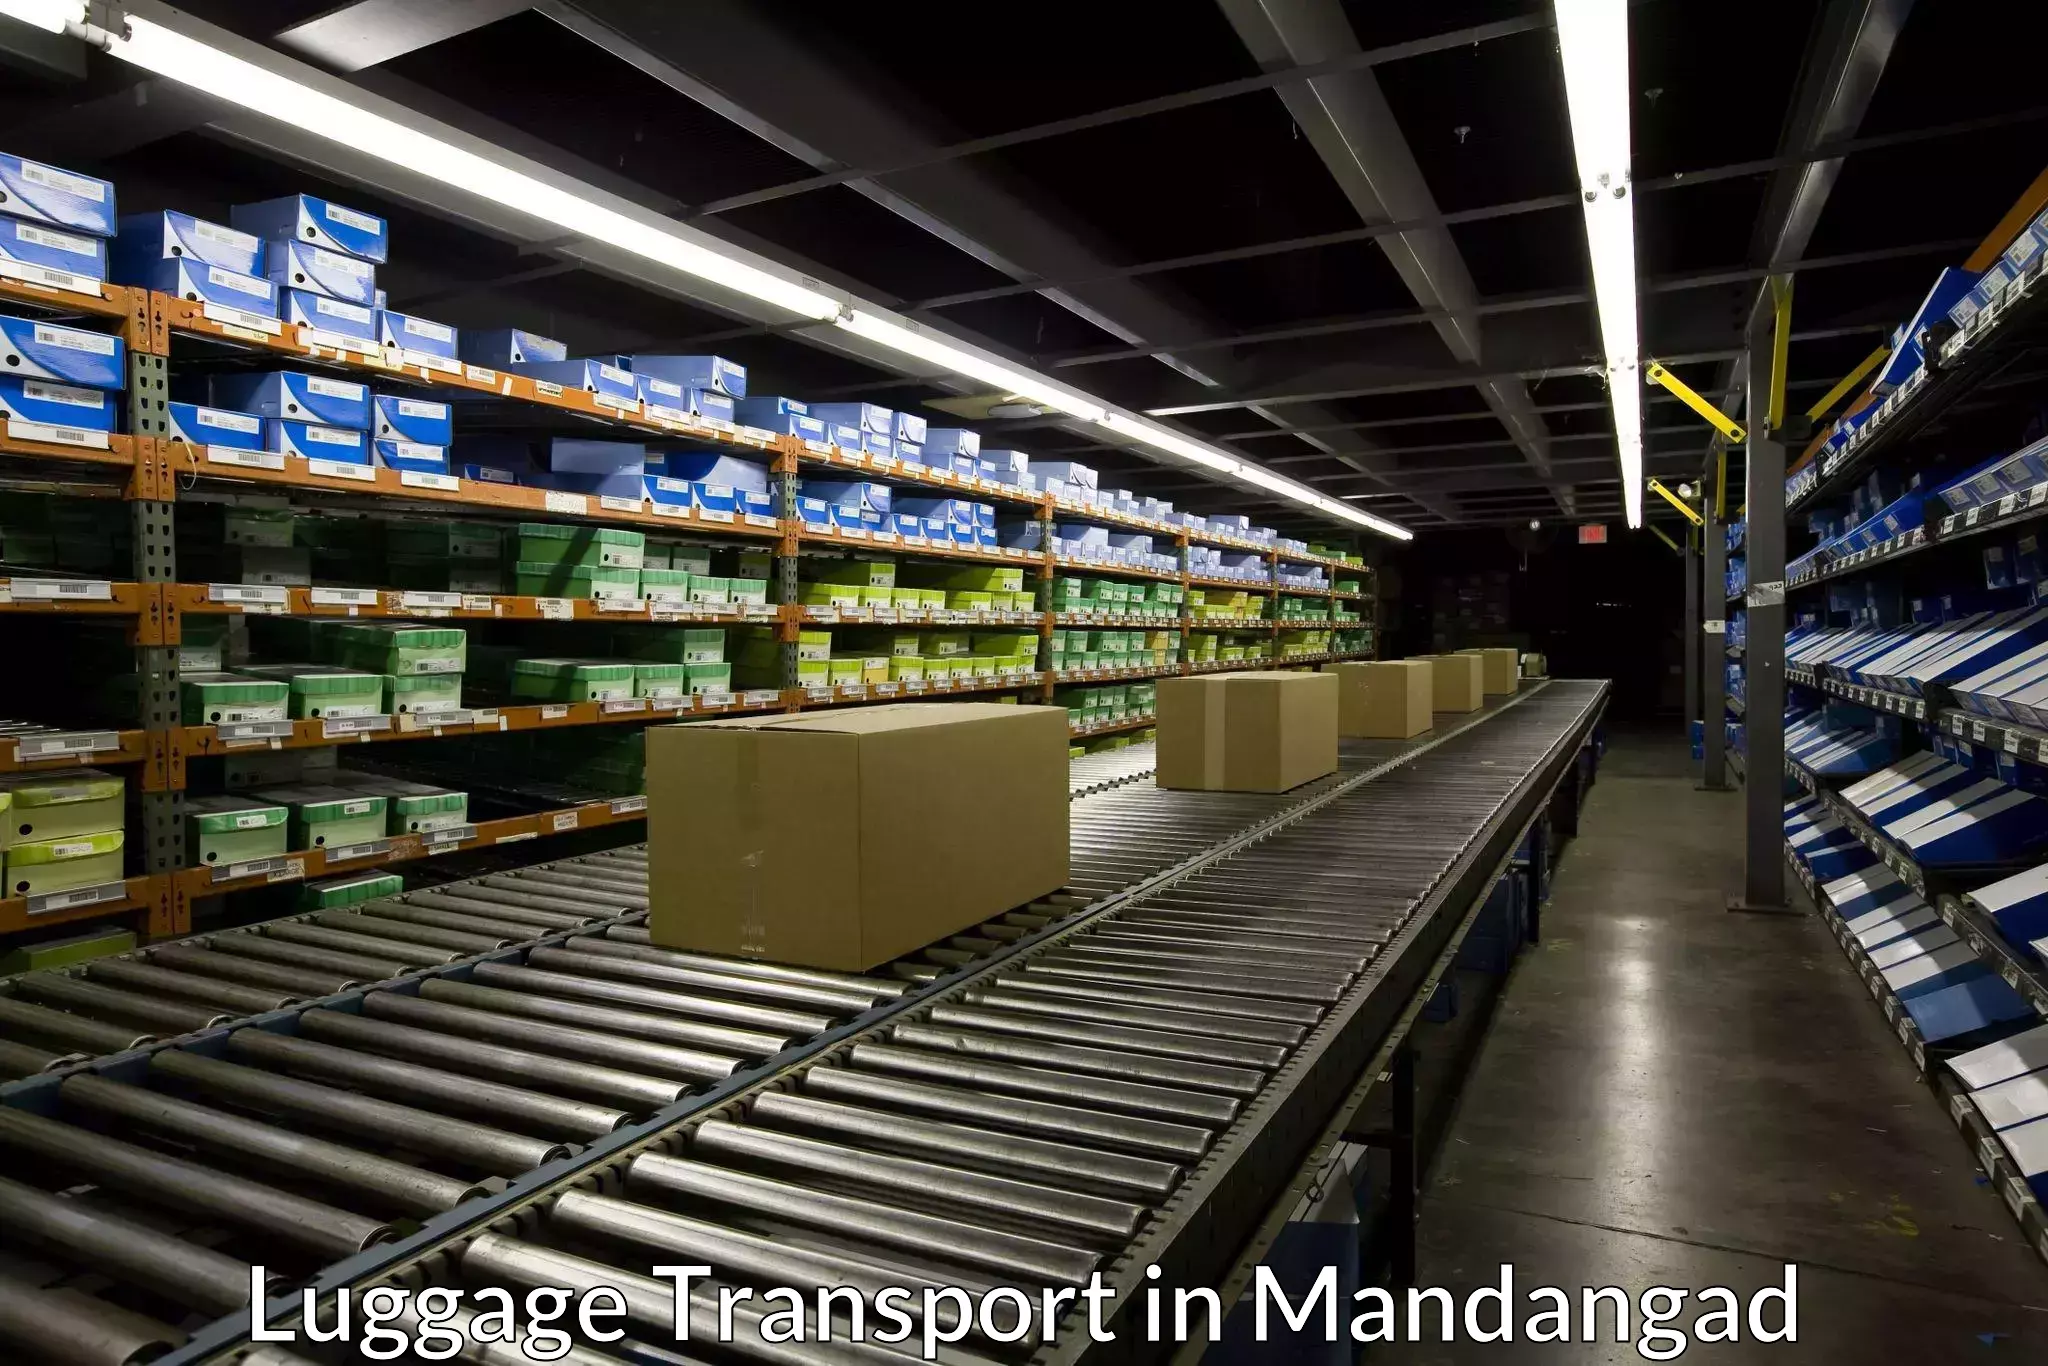 Luggage transport deals in Mandangad